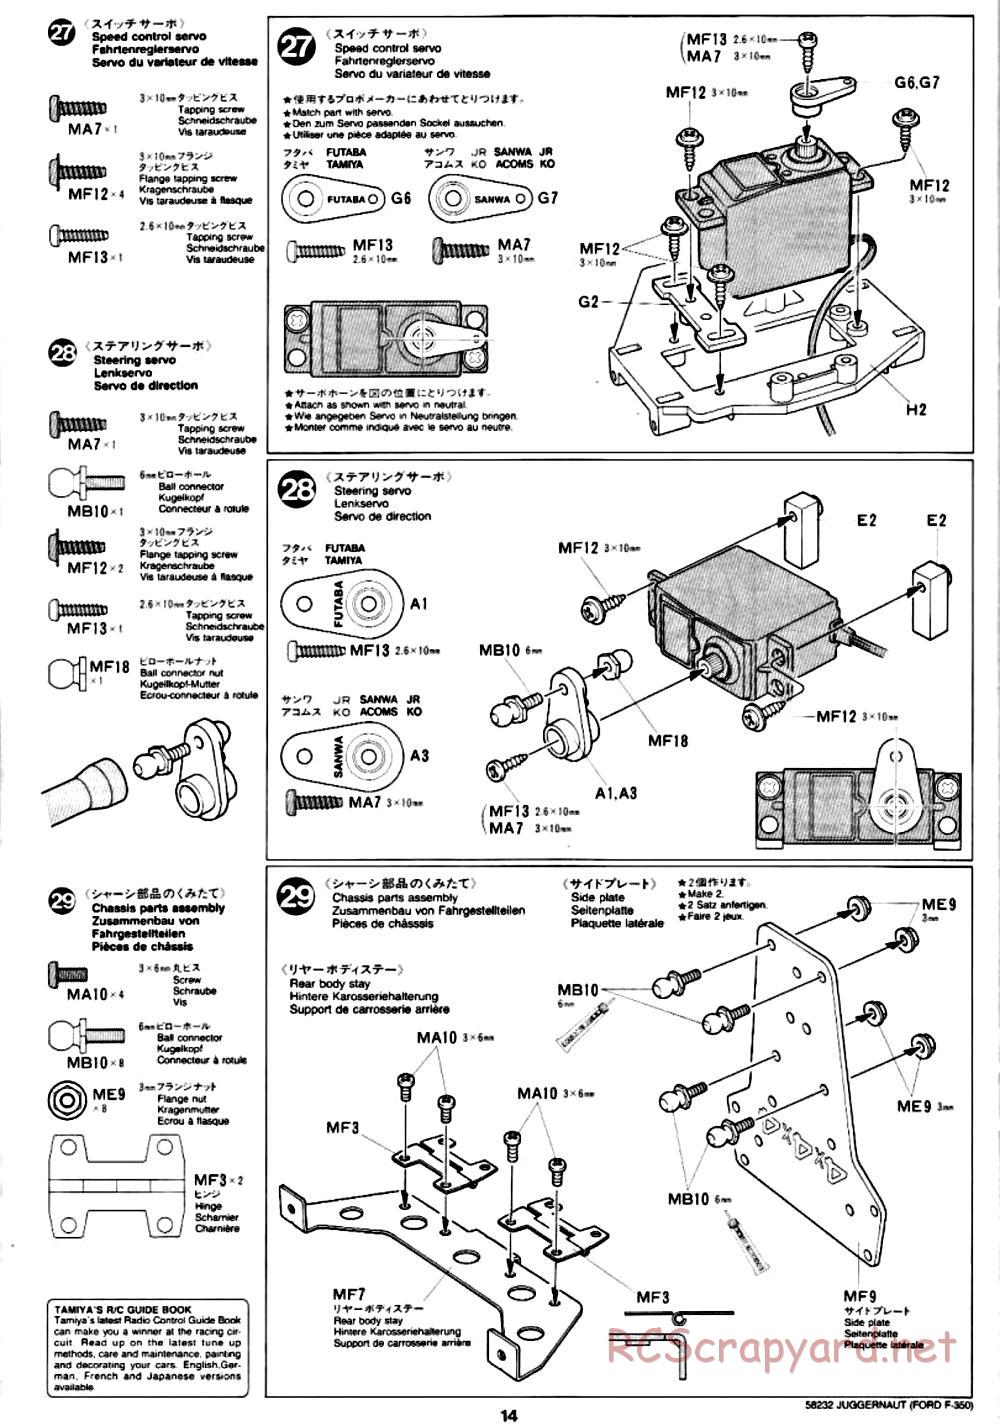 Tamiya - Juggernaut Chassis - Manual - Page 14